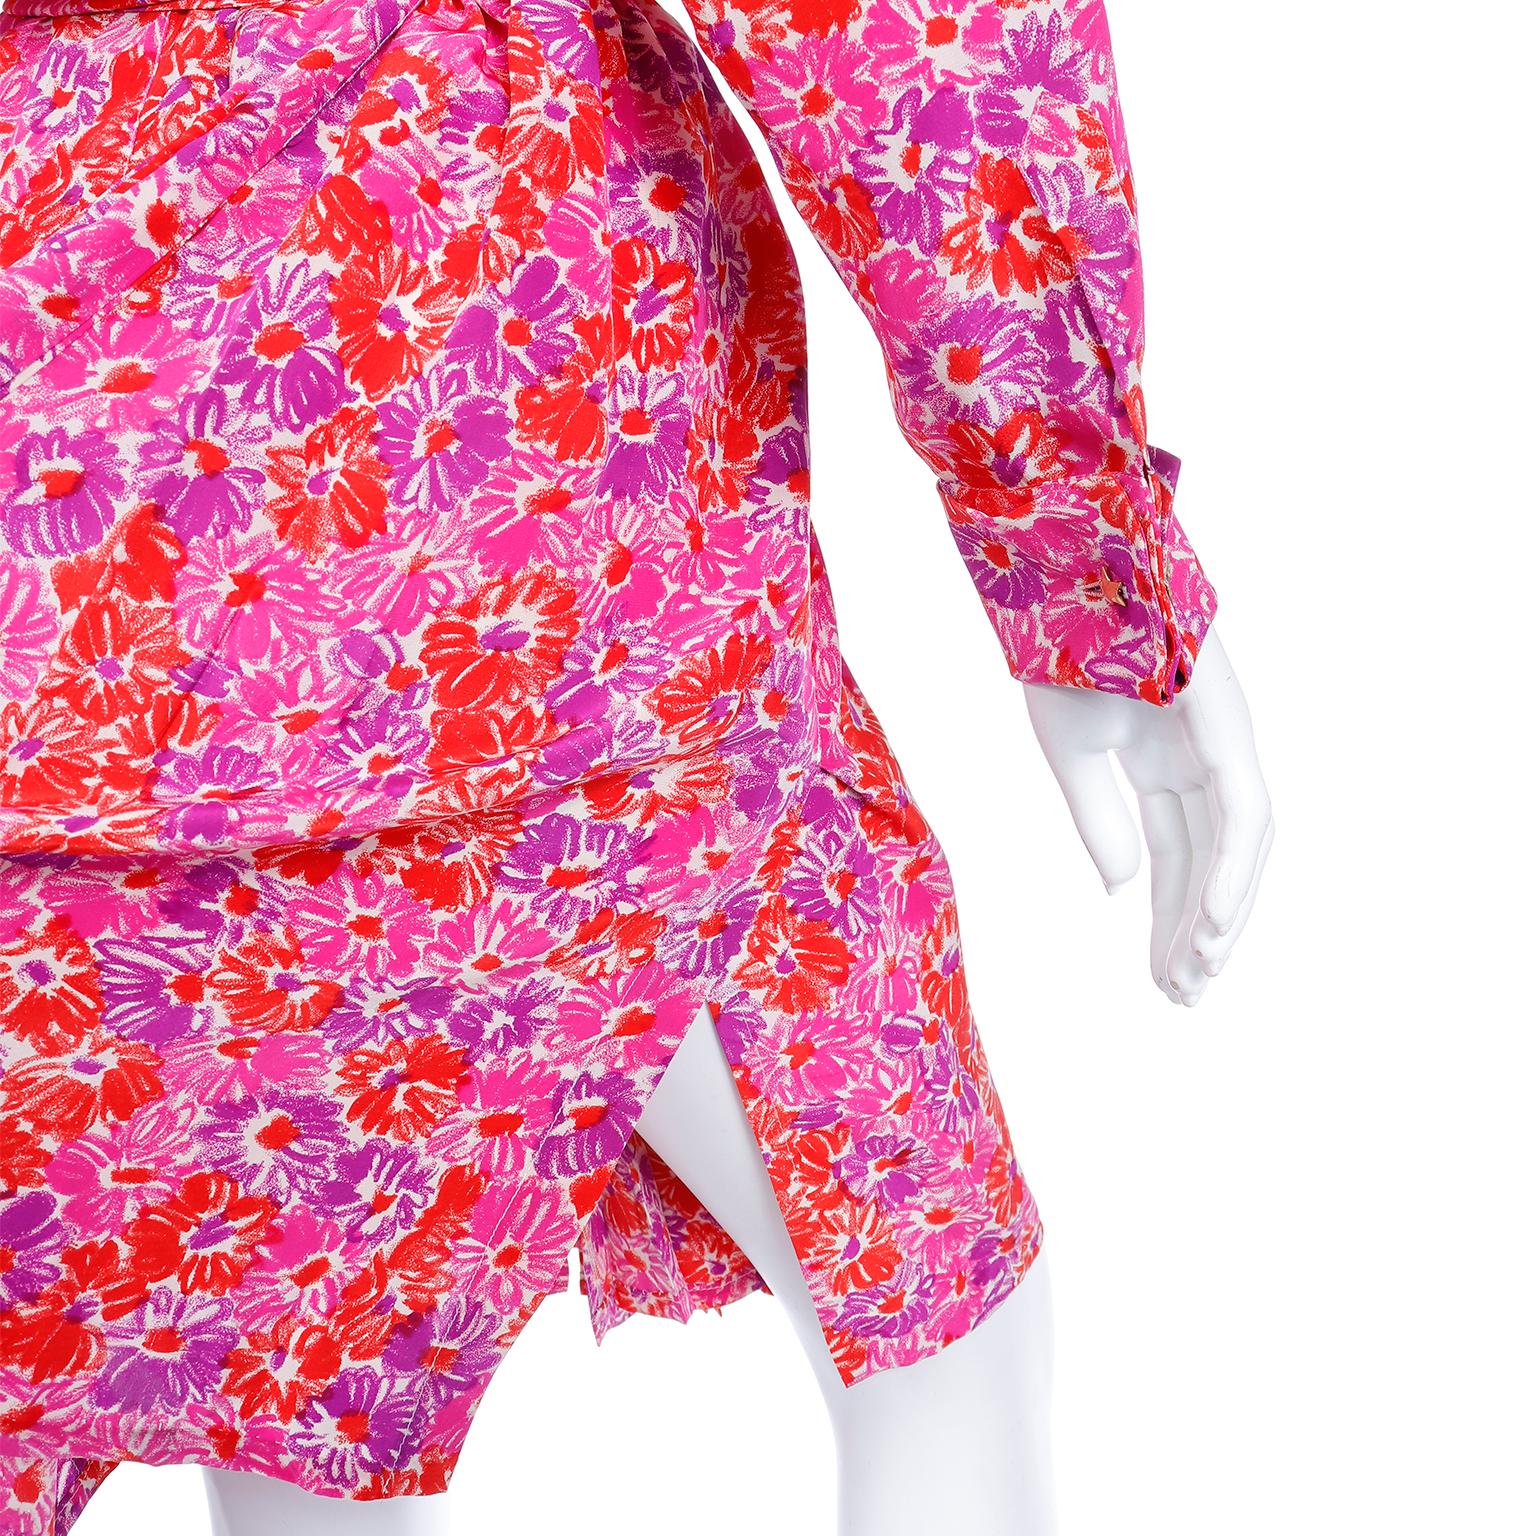 Yves Saint Laurent S/S 1989 Vintage Colorful Pink Floral Silk YSL Runway Dress For Sale 6